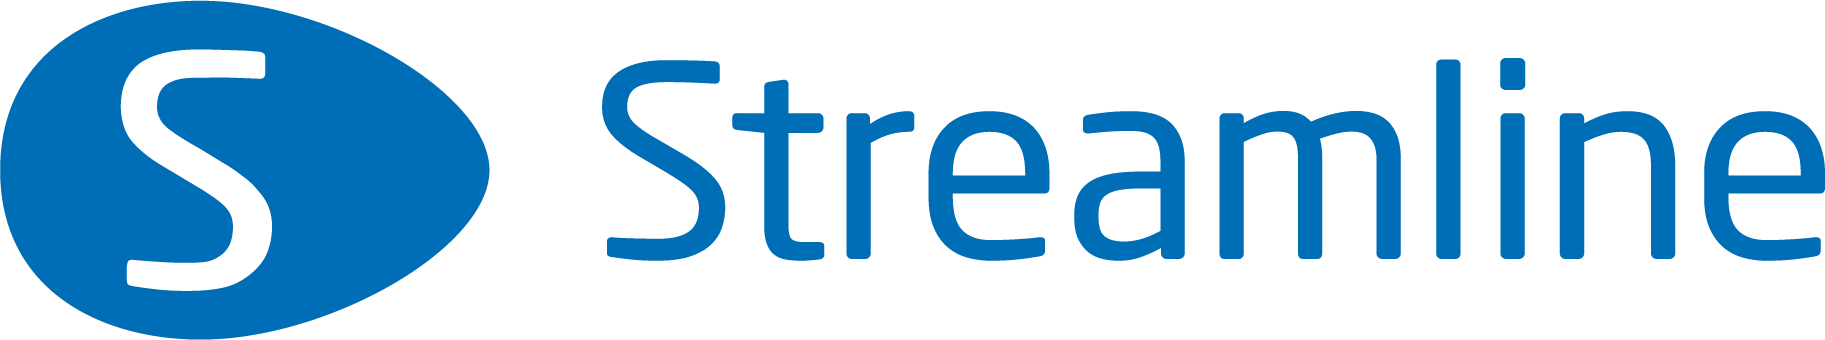 Logo Streamline biru